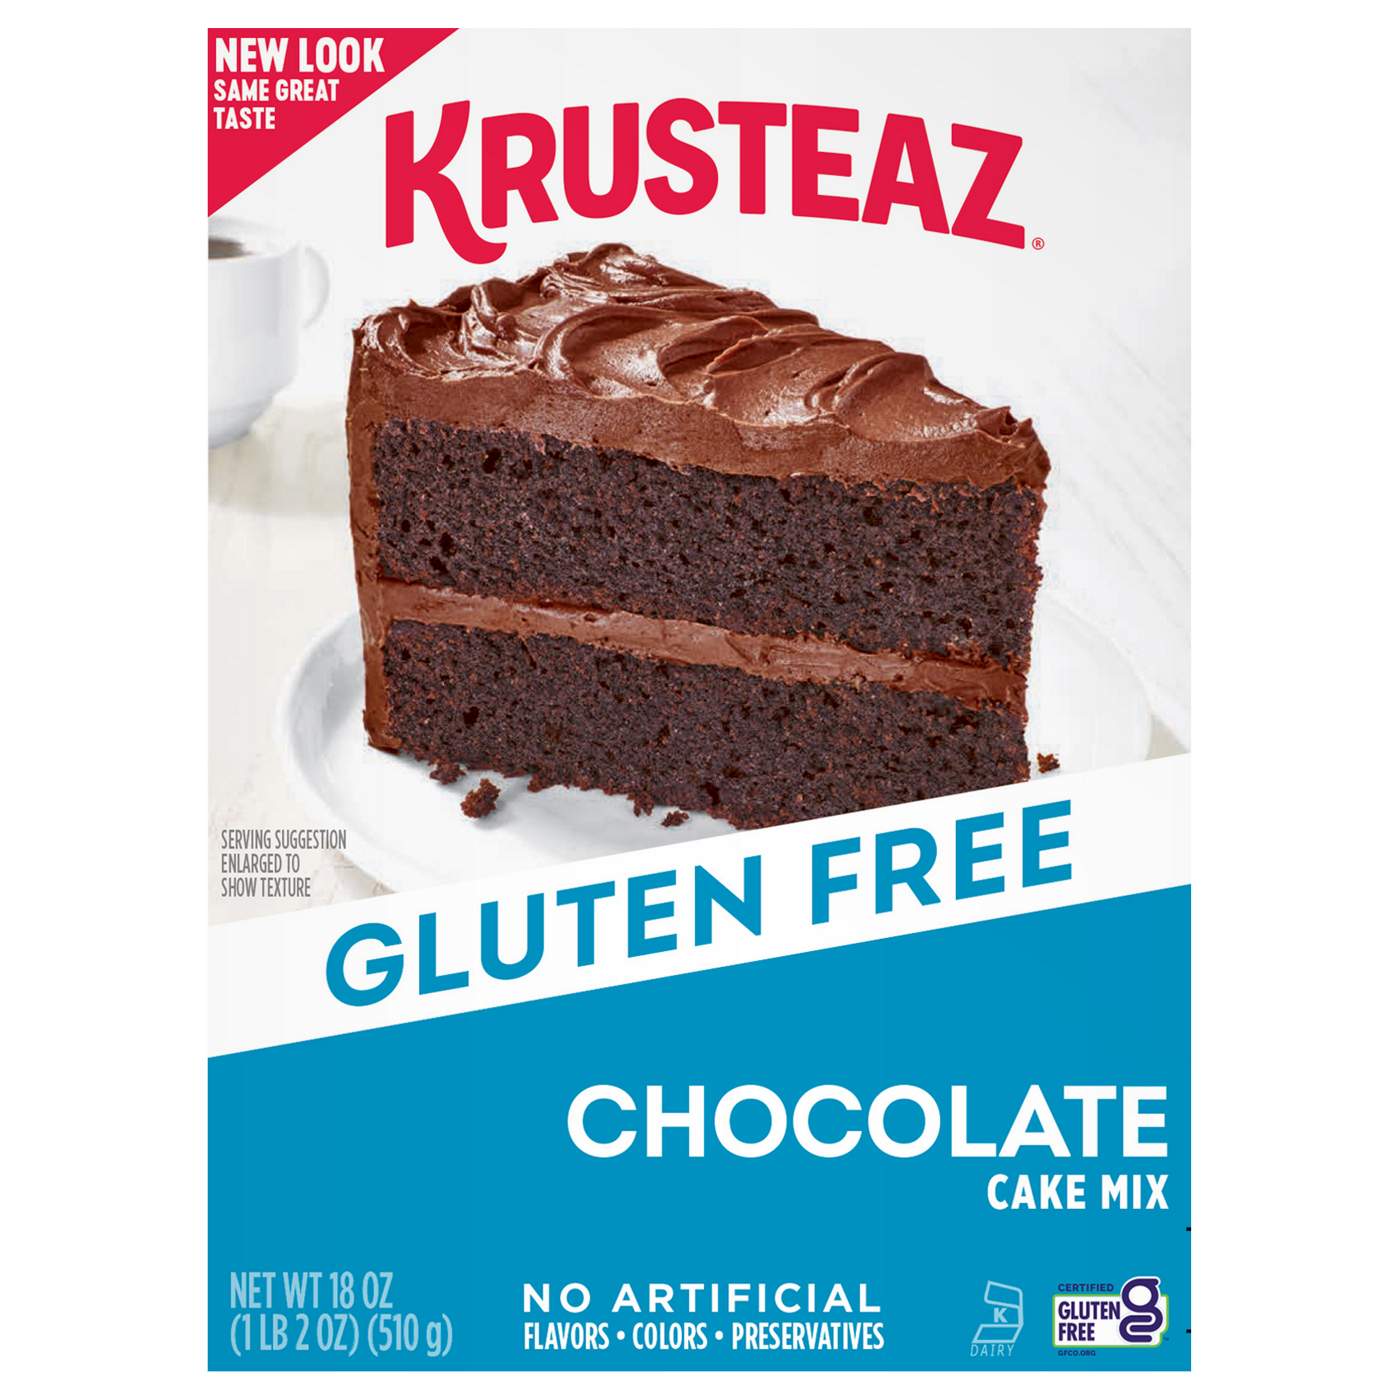 Krusteaz Gluten Free Chocolate Cake Mix; image 1 of 7